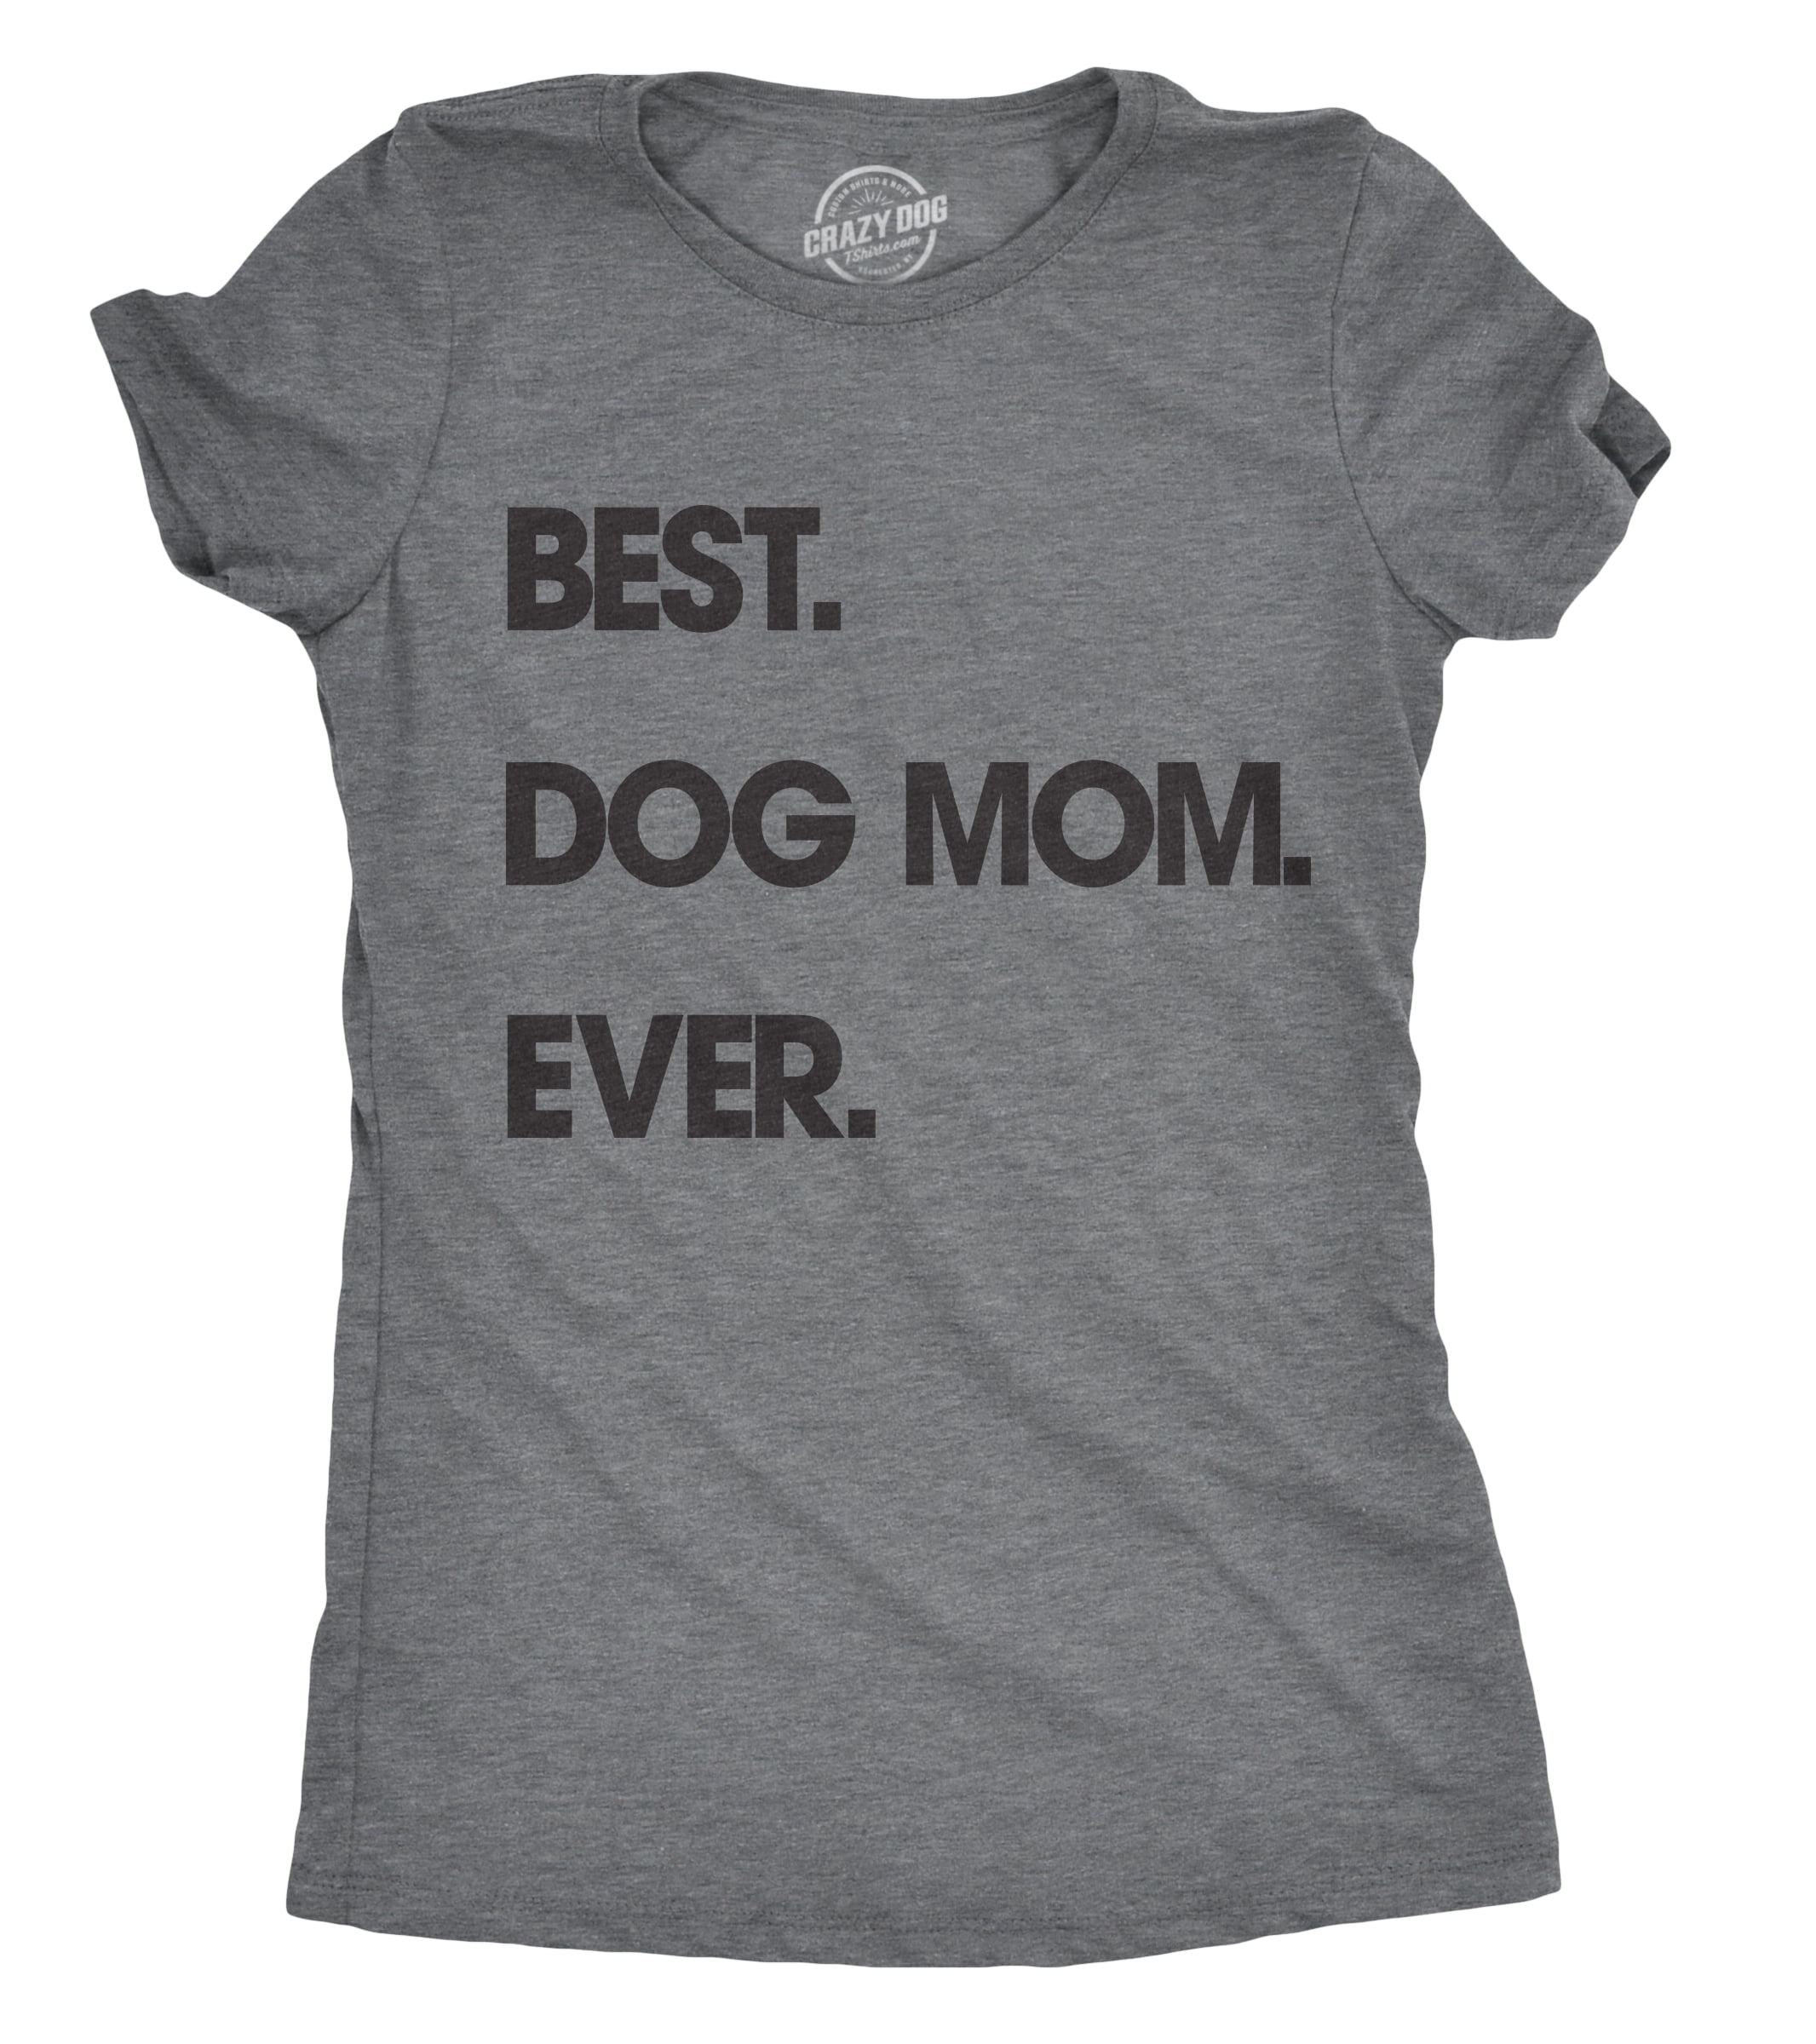 Dog Mom Shirt Women Funny Dog Paw Cute Printed Tee Shirt Tank Tops Blouse